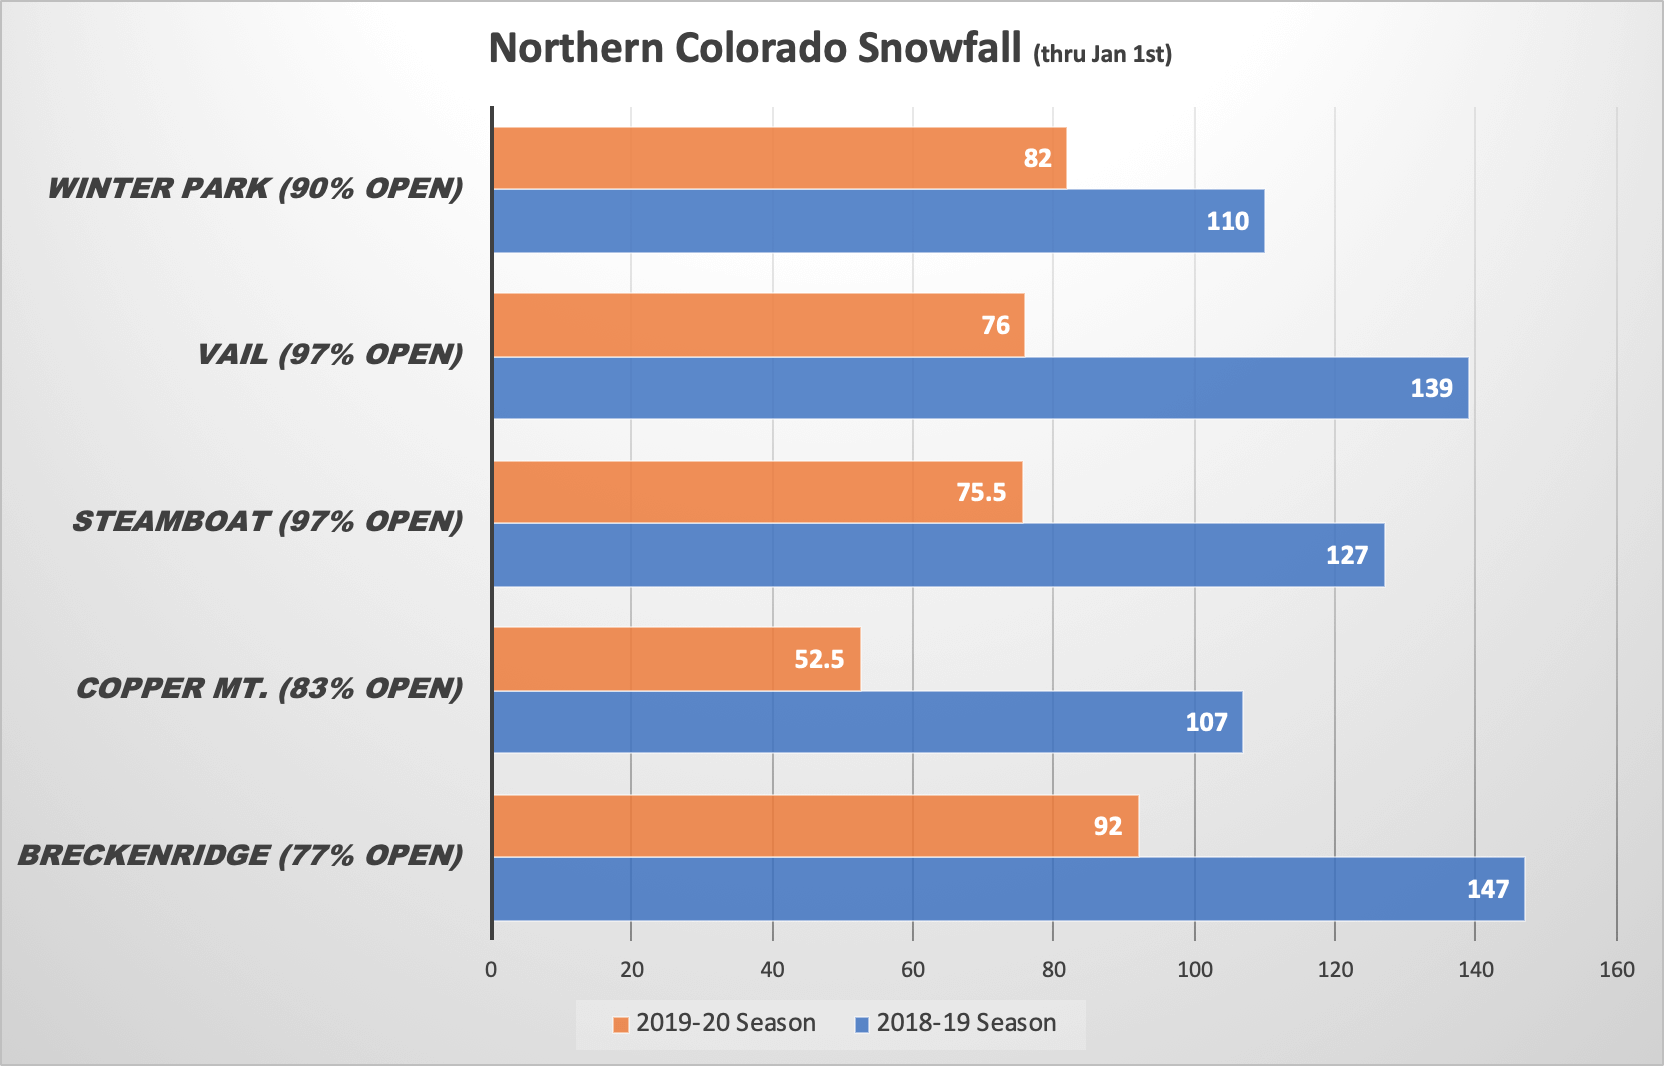 Northern Colorado Ski Resort Snowfall Comparison